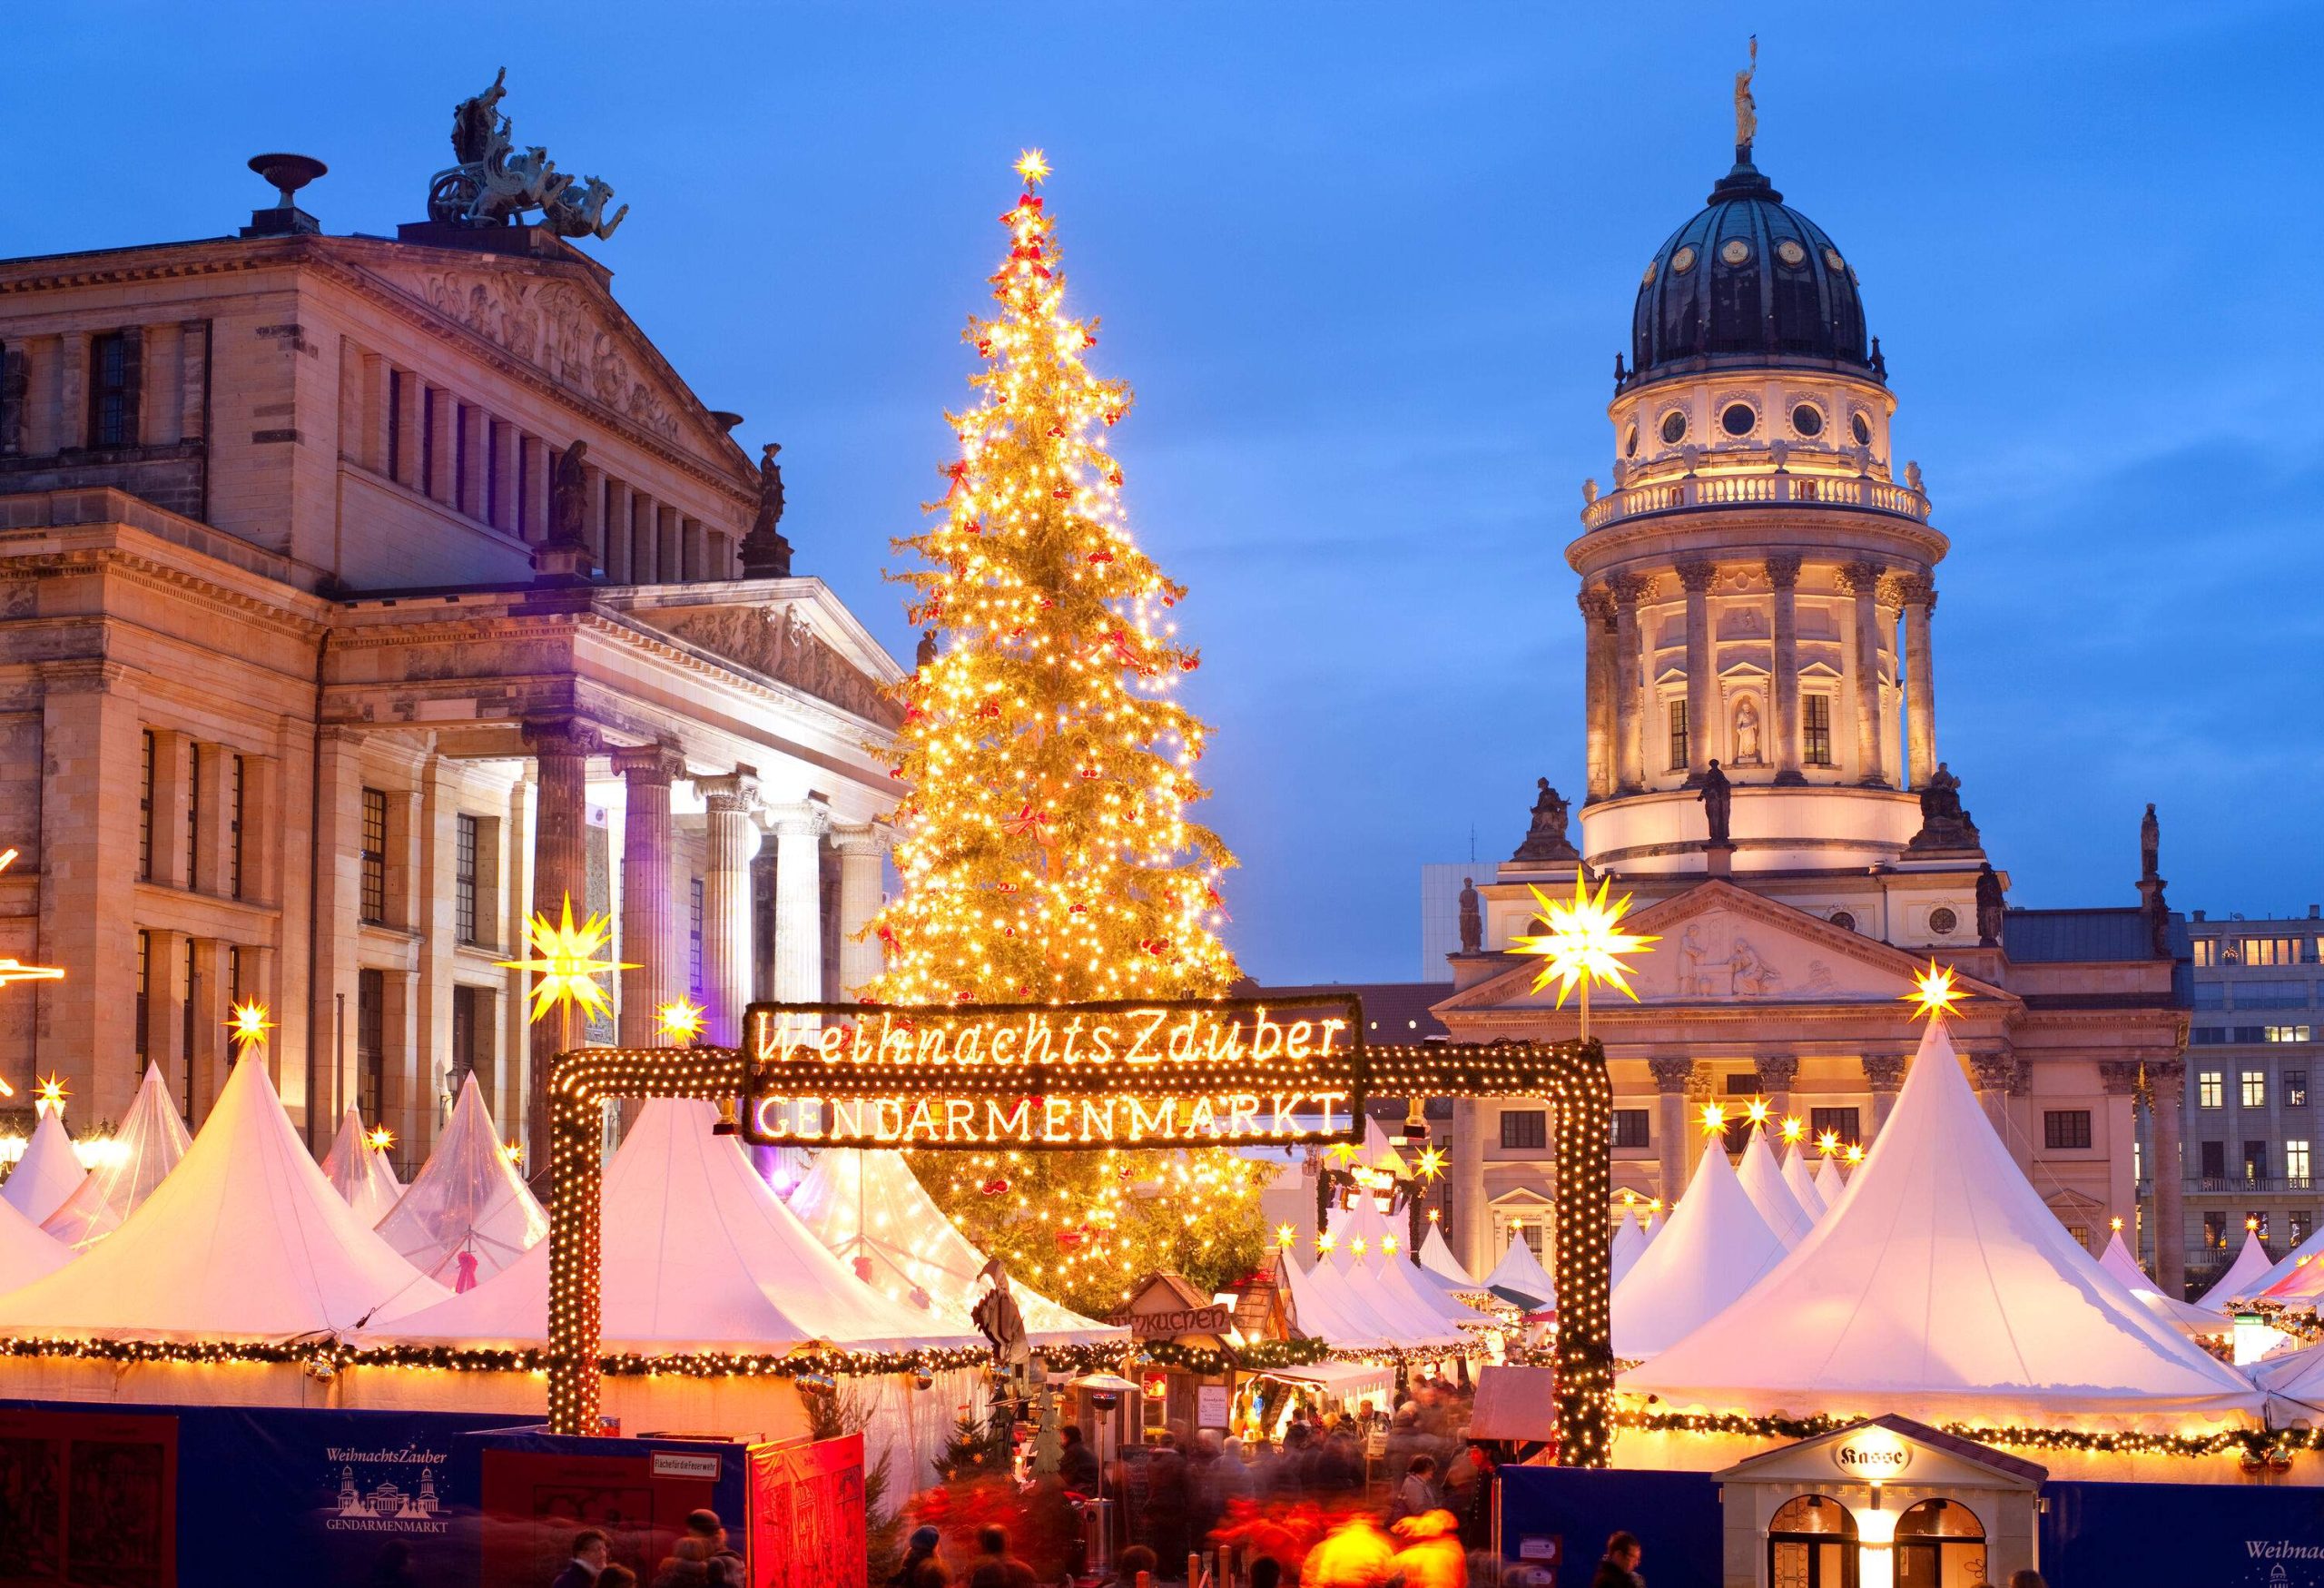 christmas markets with tents on the Gendarmenmarkt, Berlin, Germany